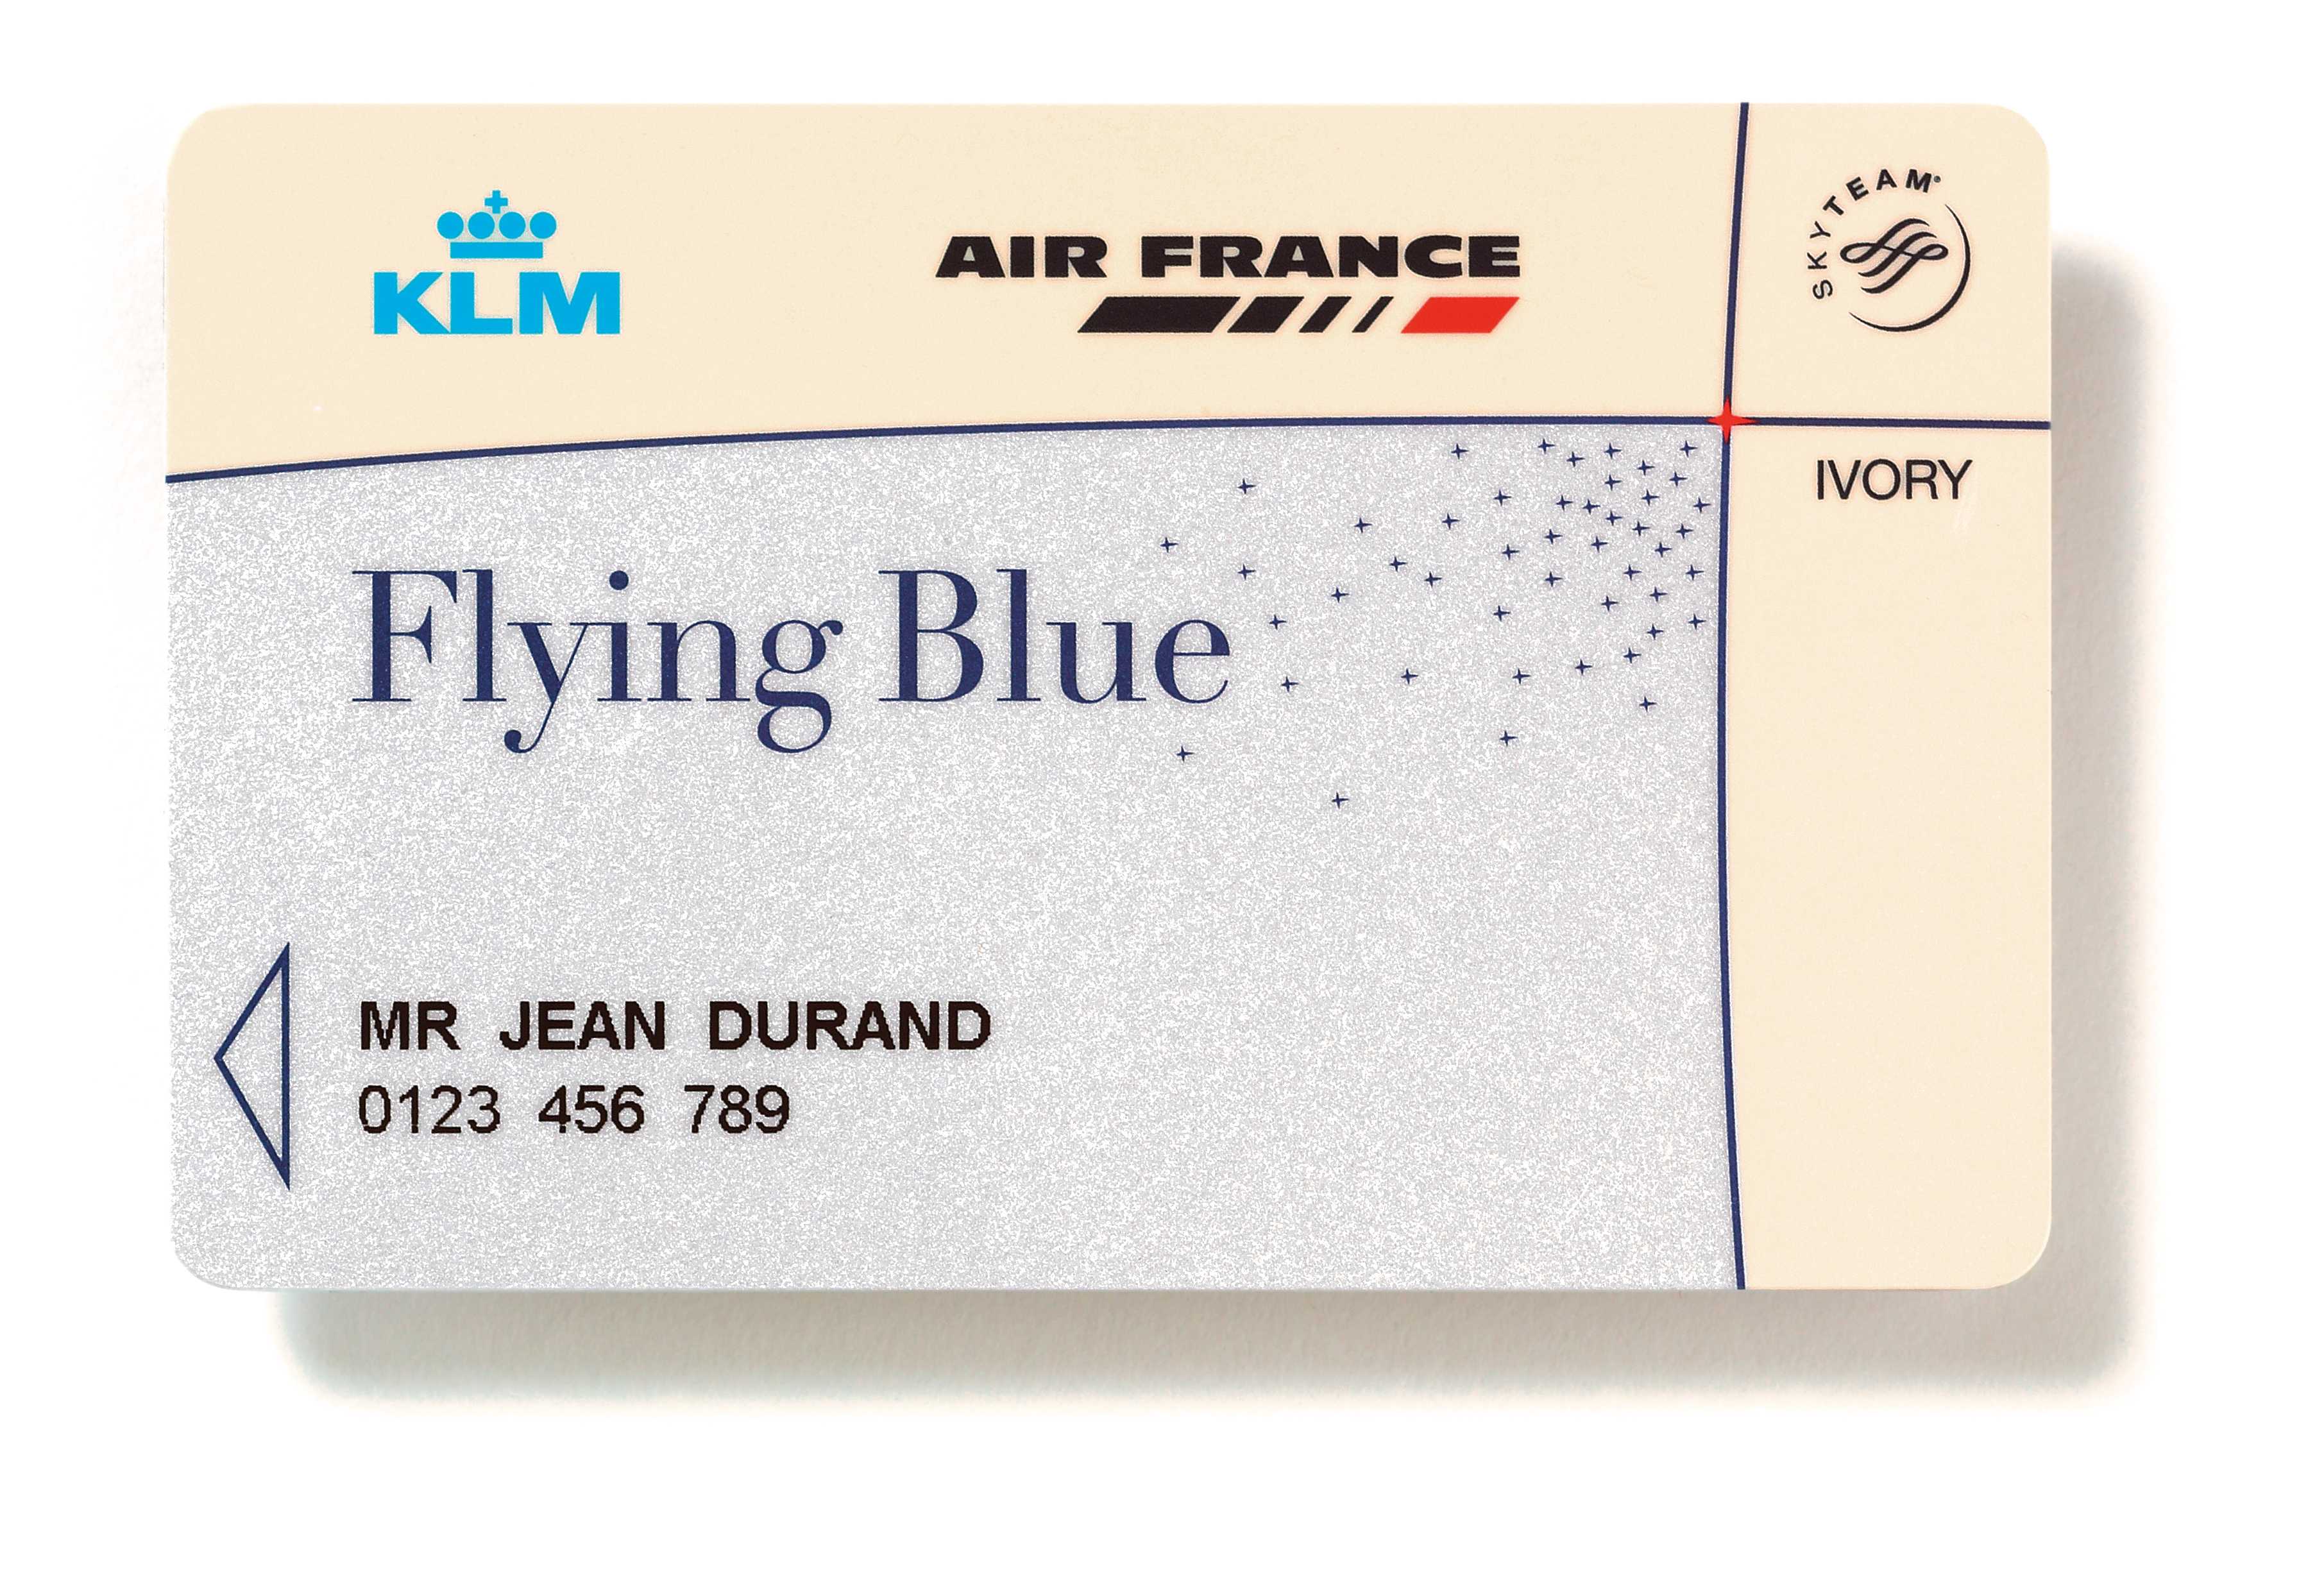 2005 – programa de fidelidade Flying Blue